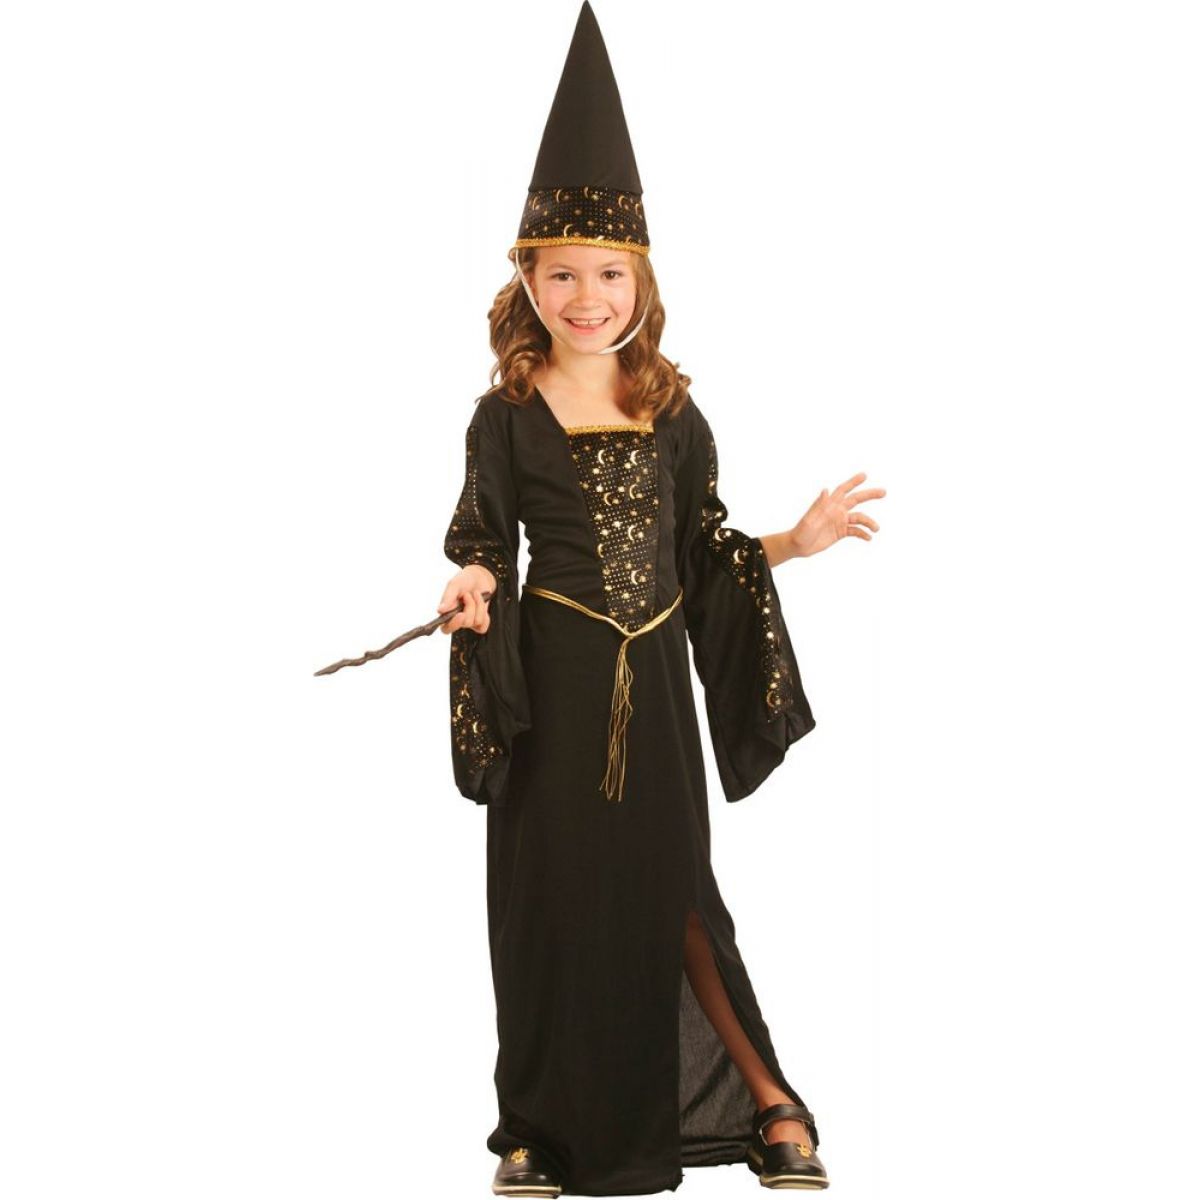 Made Dětský kostým Čarodějka černo-zlatá 110-120cm